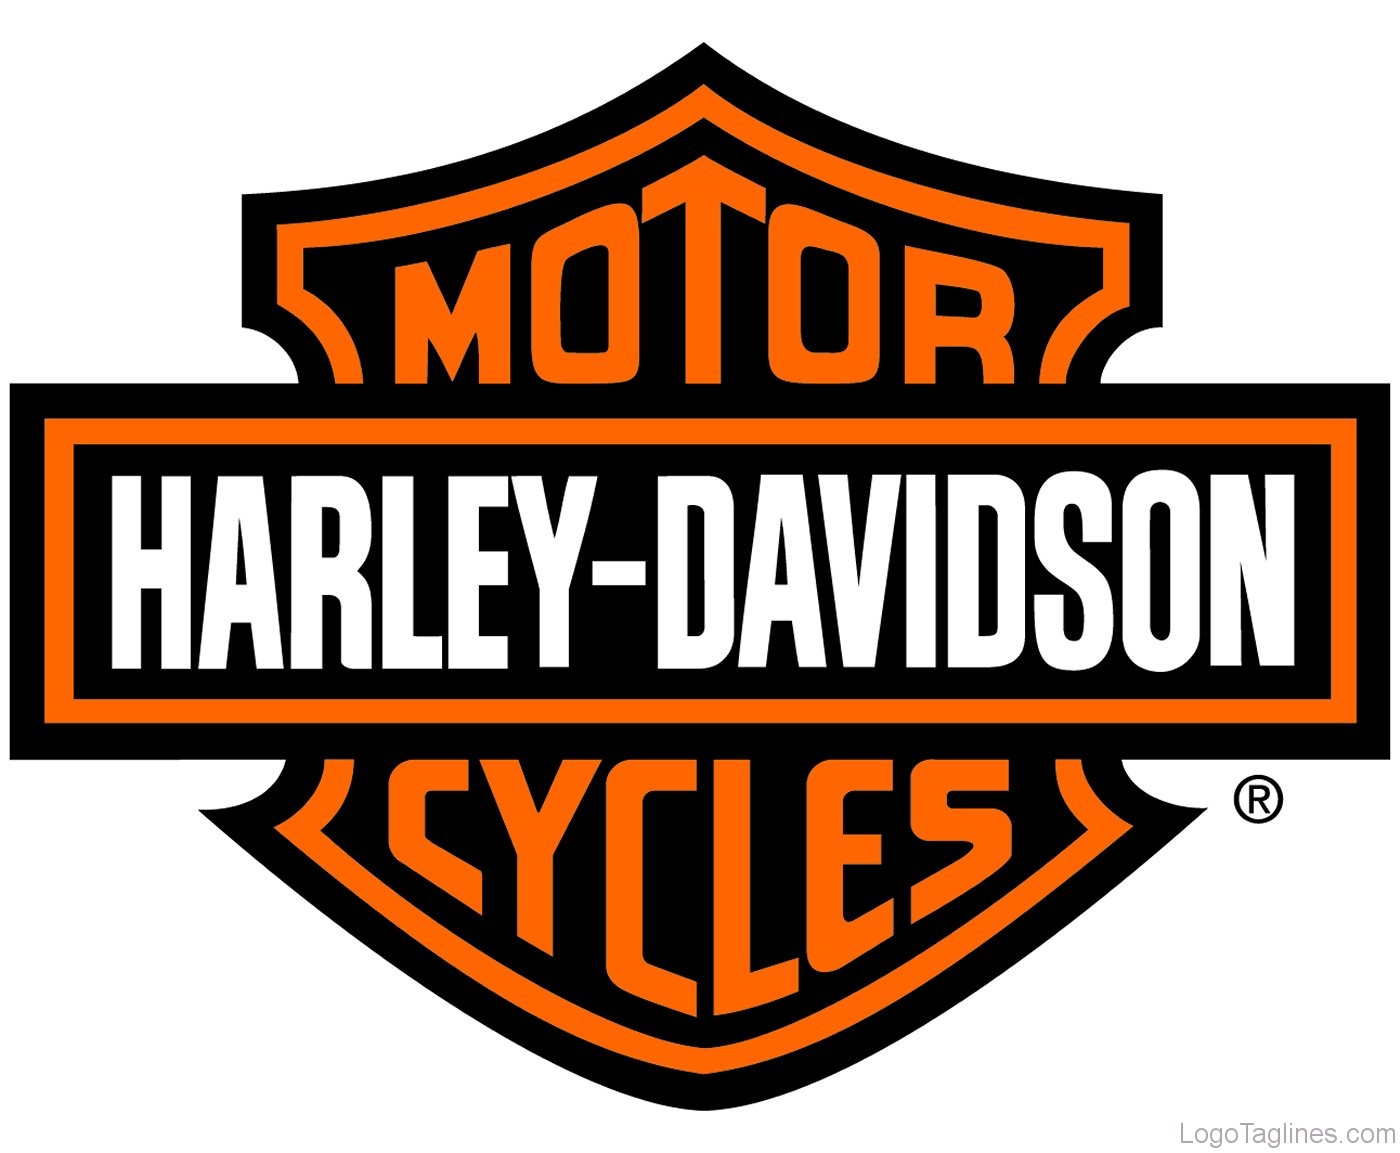 Harley Davidson Logo And Tagline